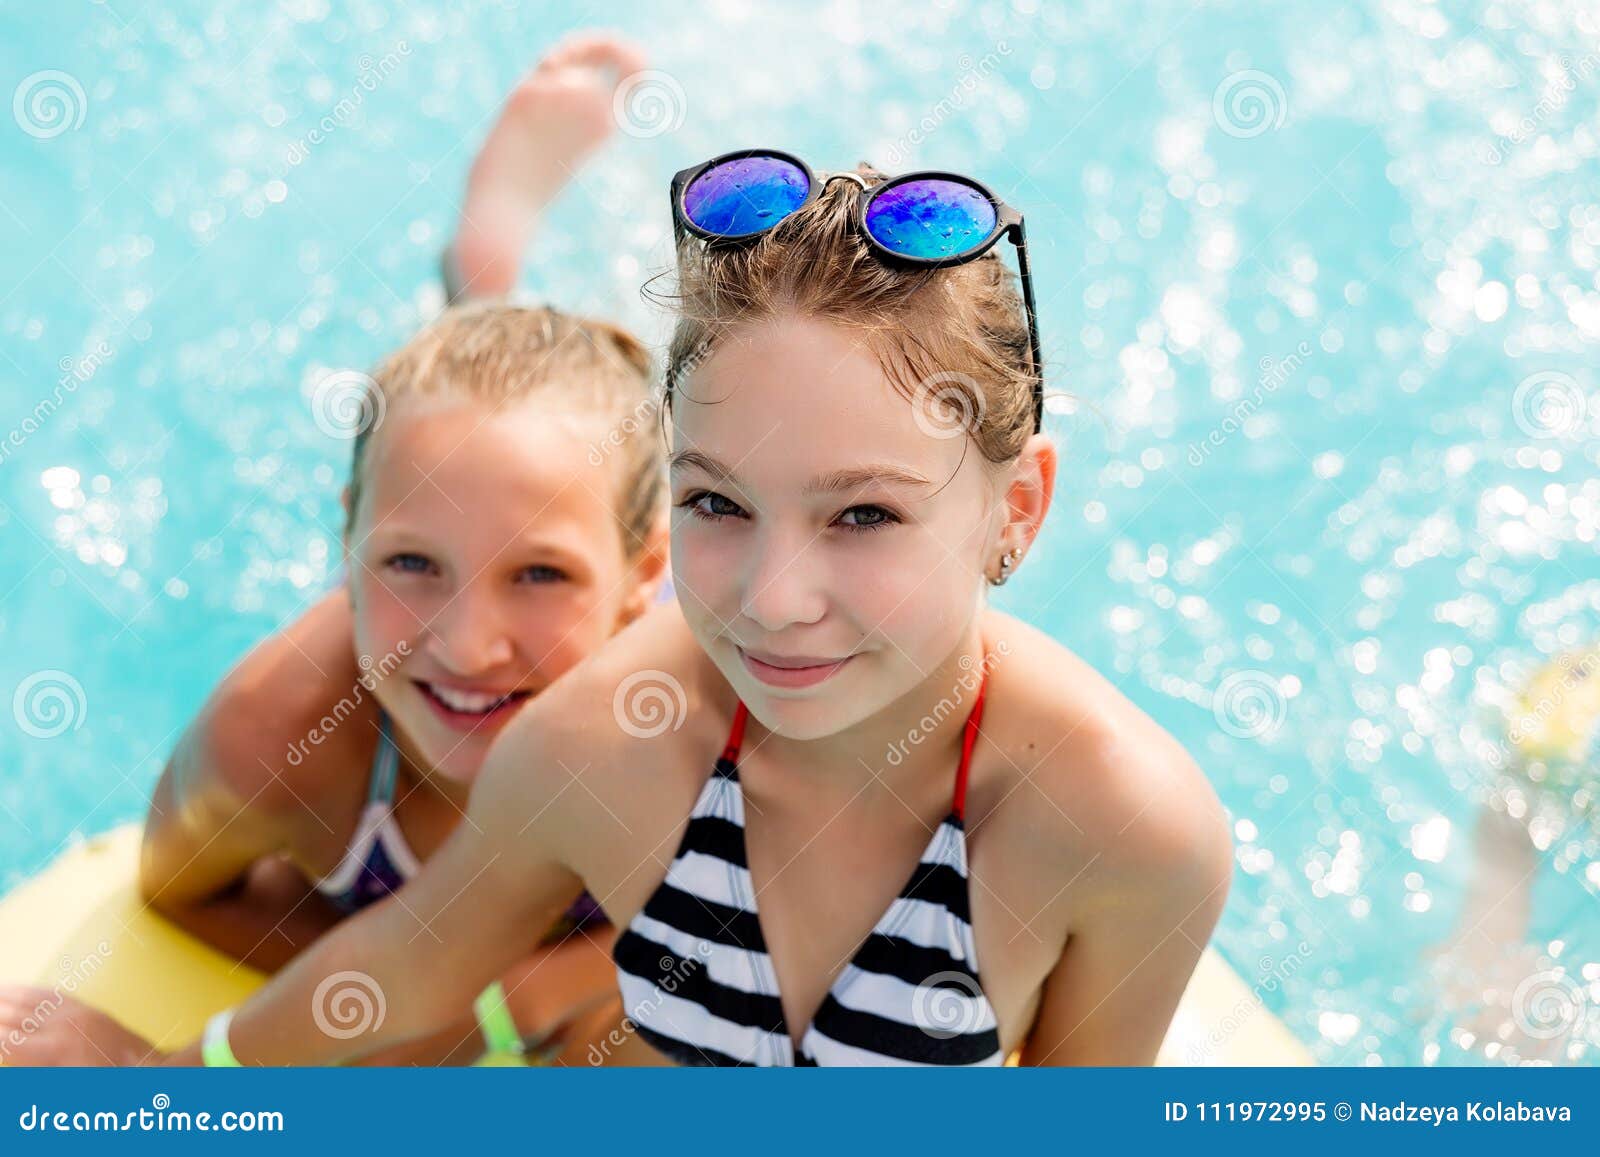 children rest in the pool in summer